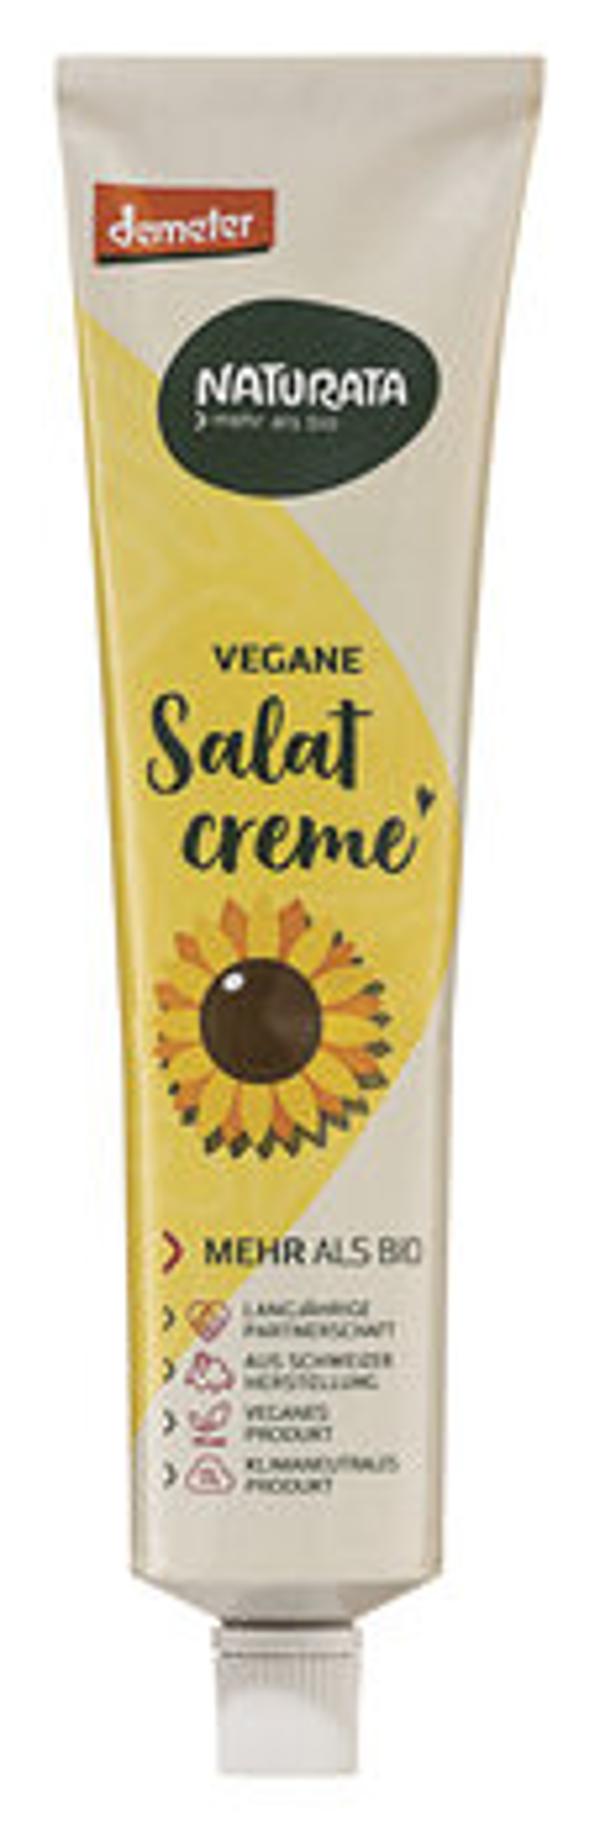 Produktfoto zu Vegane Salatcreme in der Tube